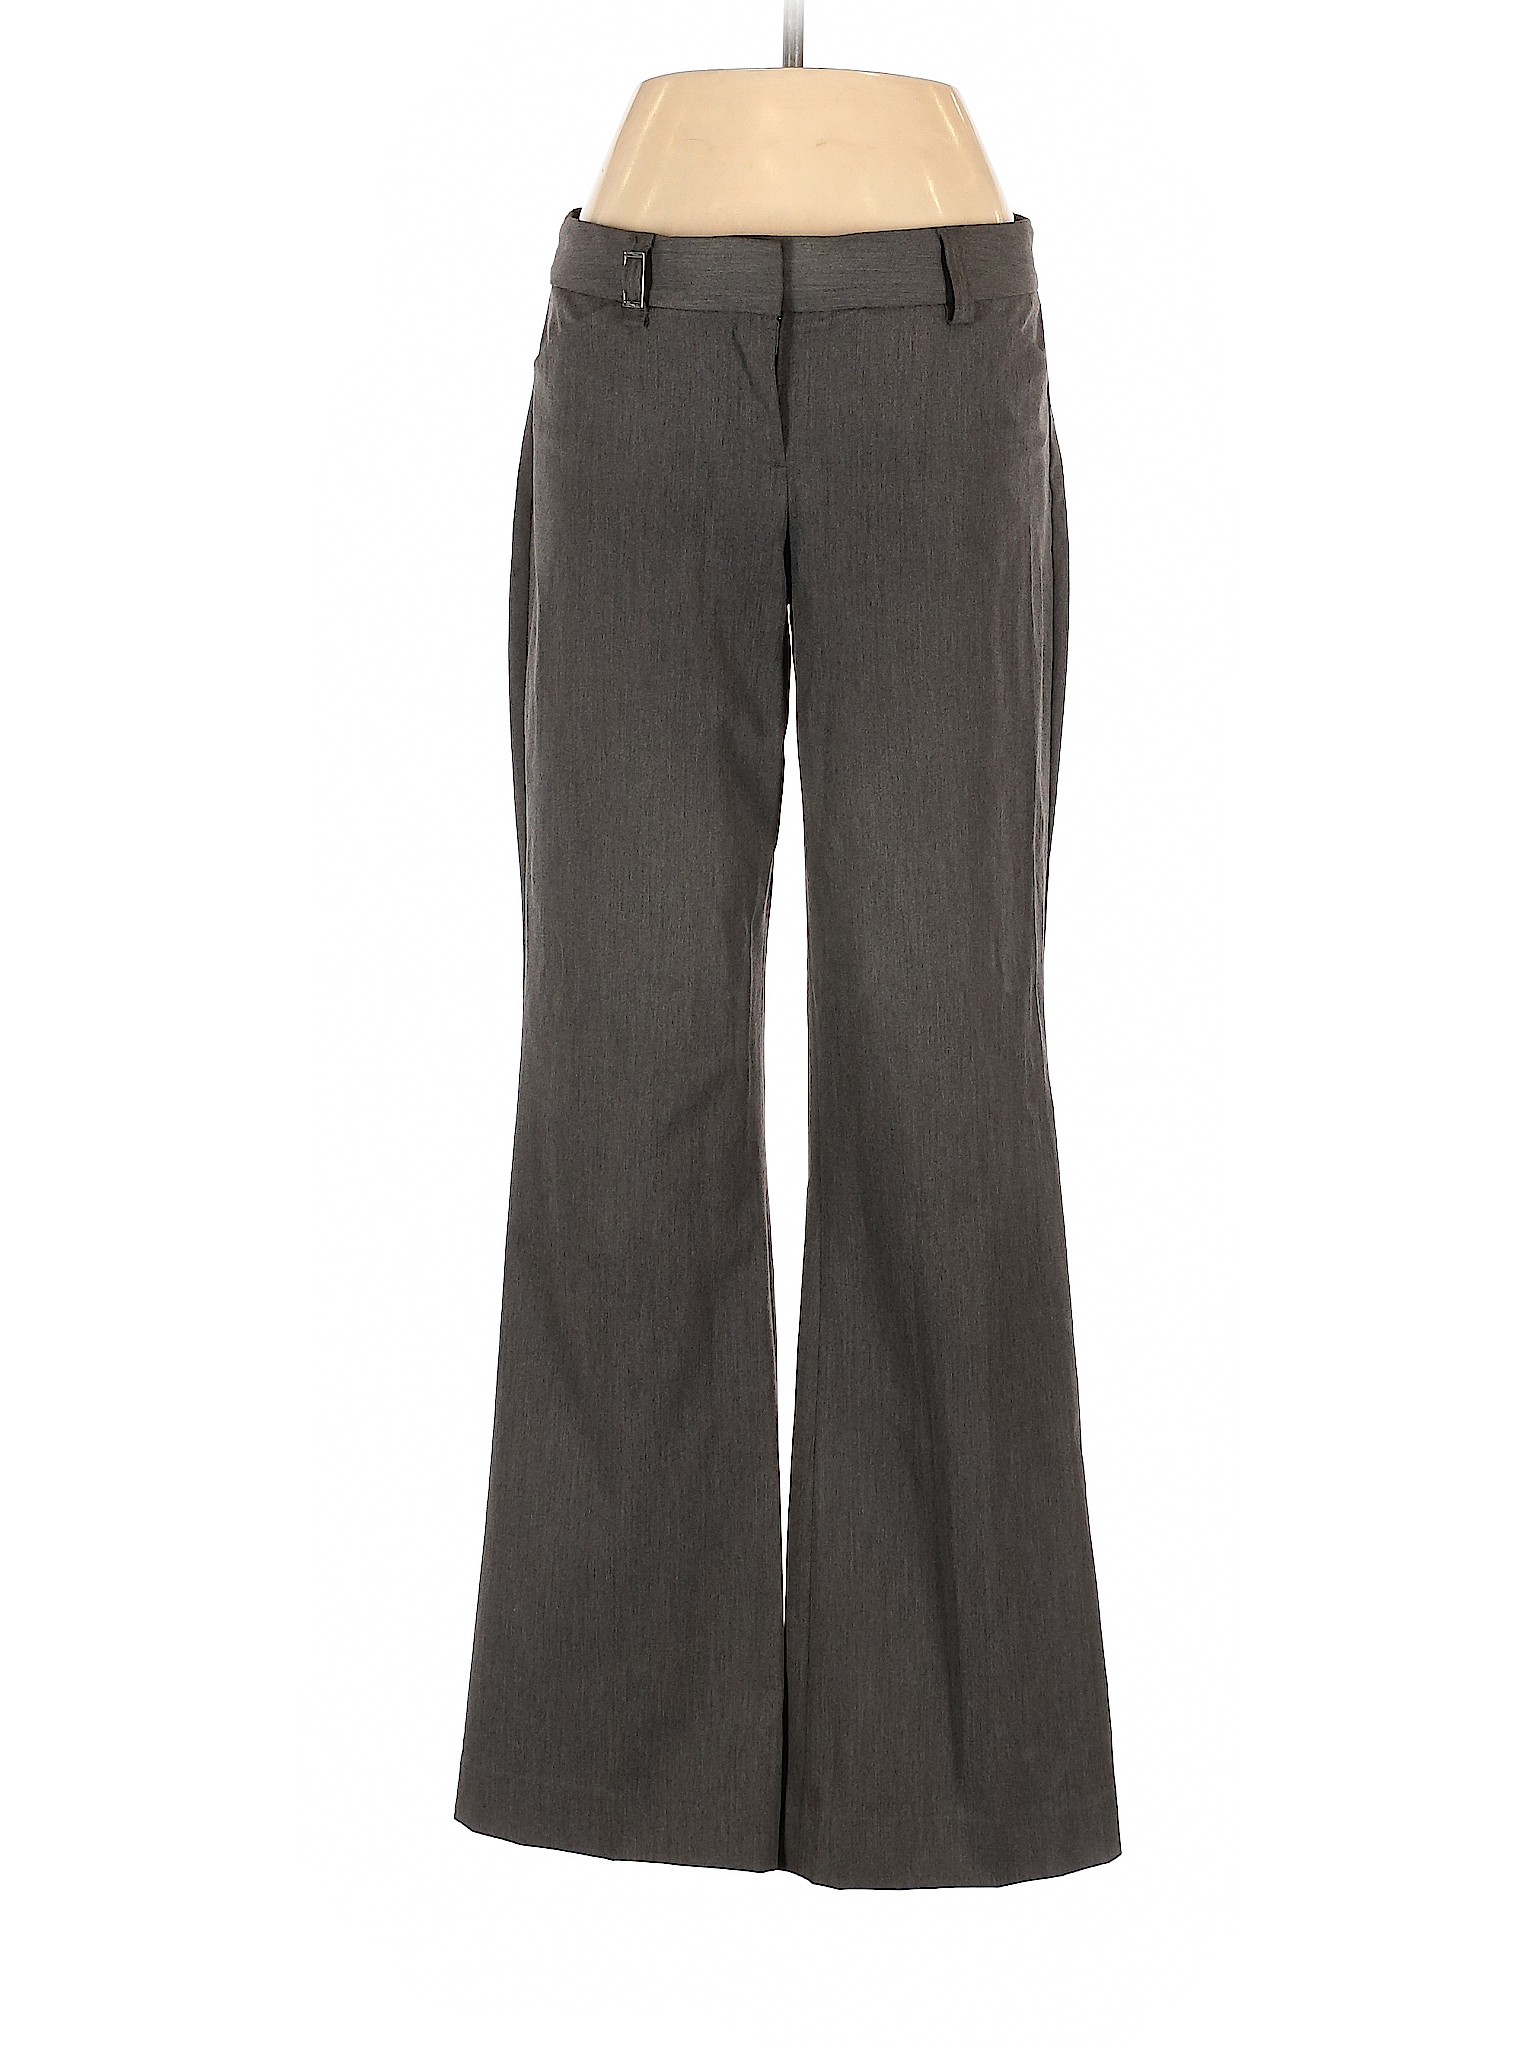 Express Women Gray Dress Pants 2 | eBay